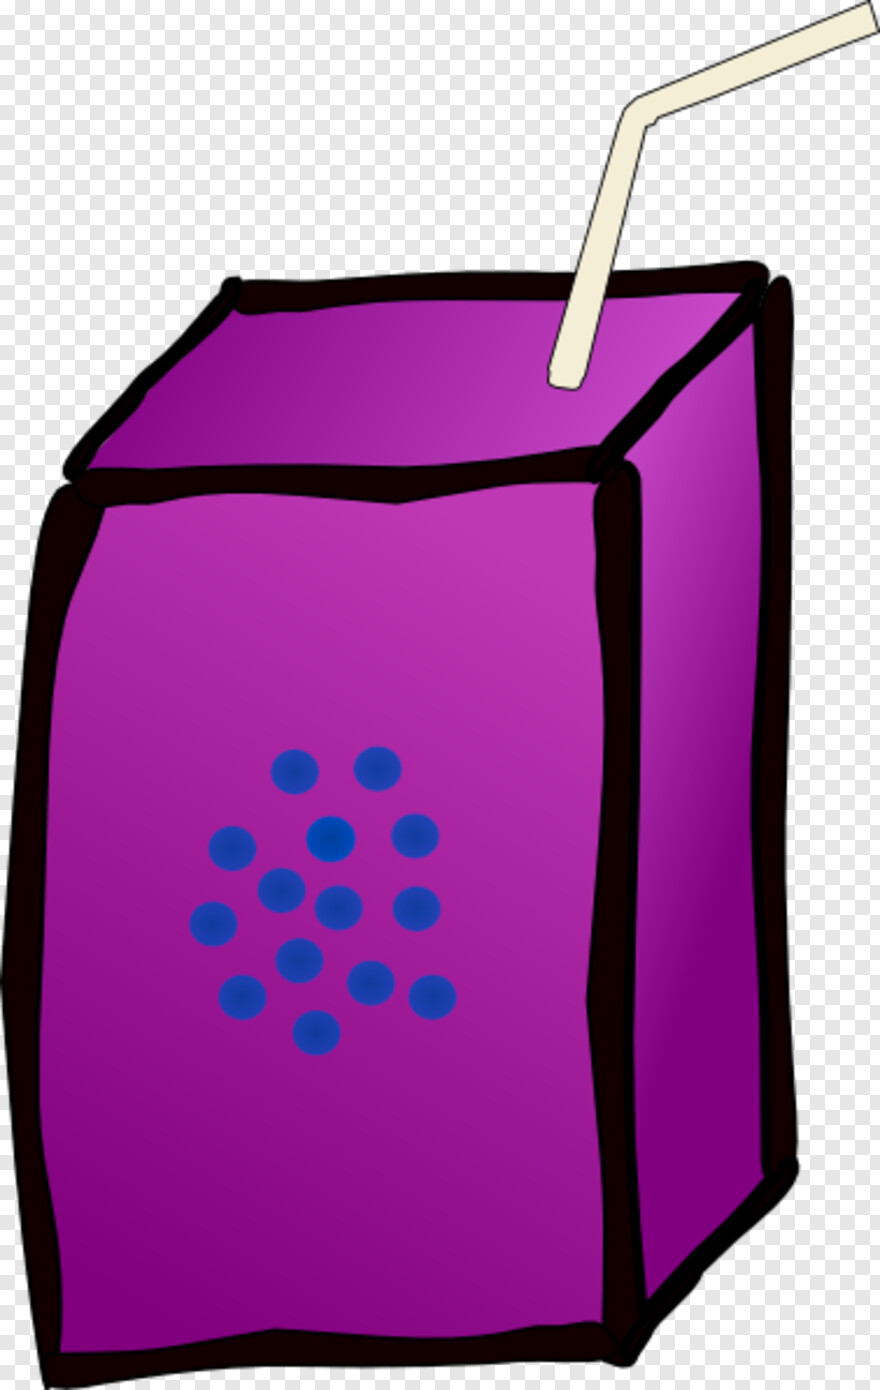  Juice Box, Tissue Box, Juice, Black Box, Grape Juice, Box Outline